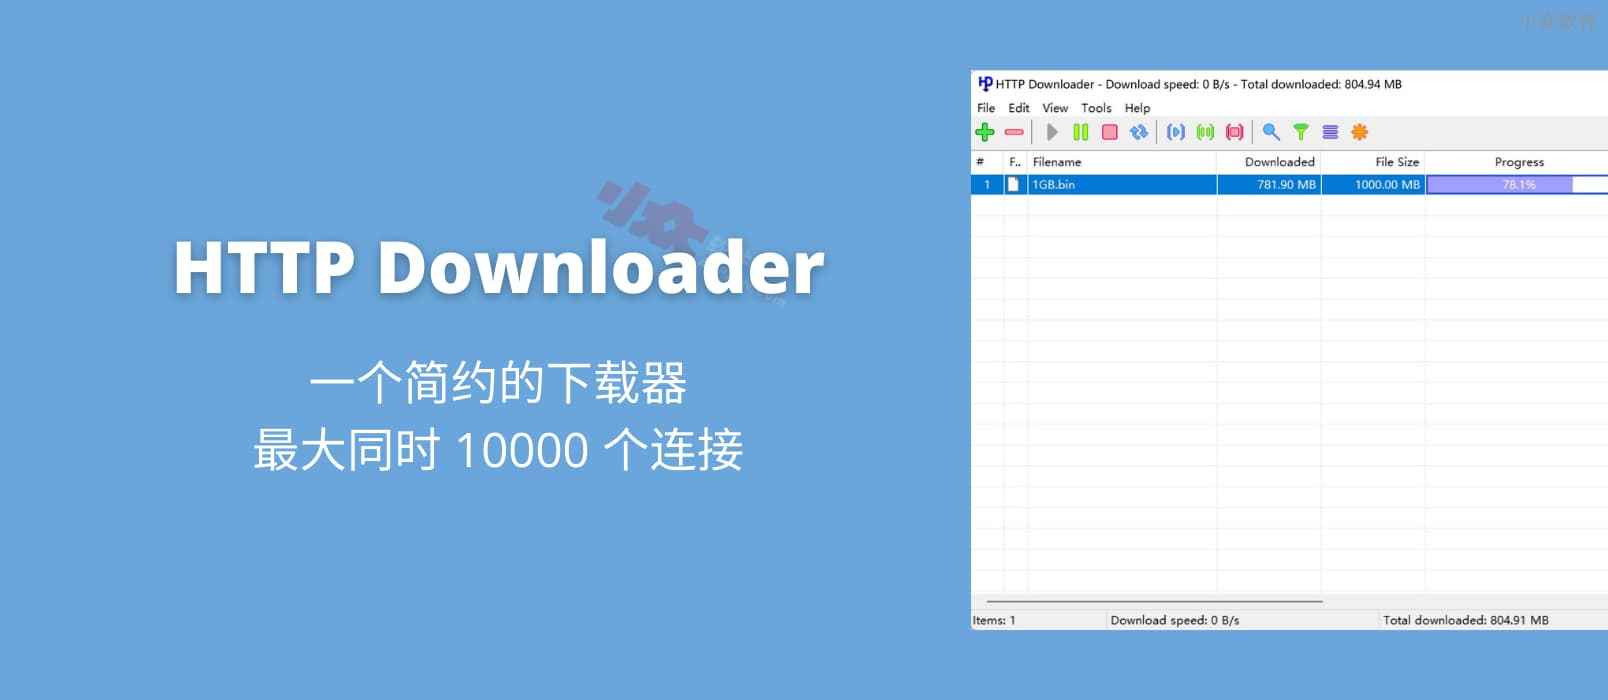 HTTP Downloader – 一个简约的下载器，最大 10000 个连接，支持 Chrome/Firefox 扩展[Windows]